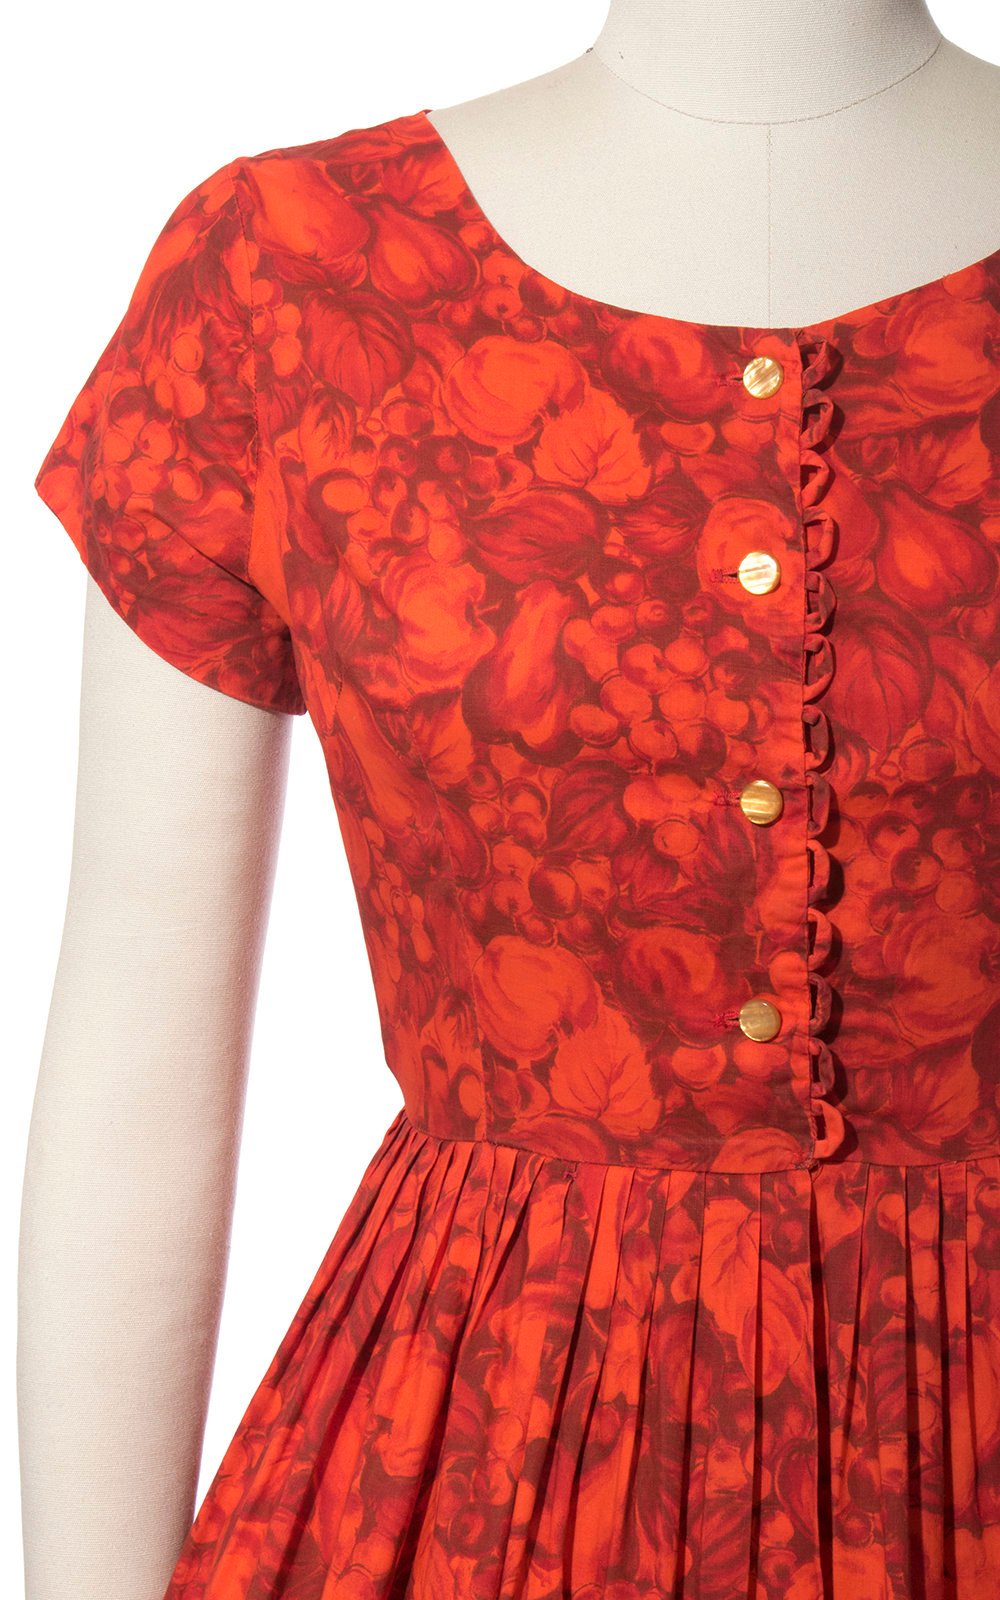 Vintage 1950s Dress | 50s MODE O&#39; DAY Fruit Novelty Print Cotton Shirtwaist Red Full Skirt Day Dress (medium)